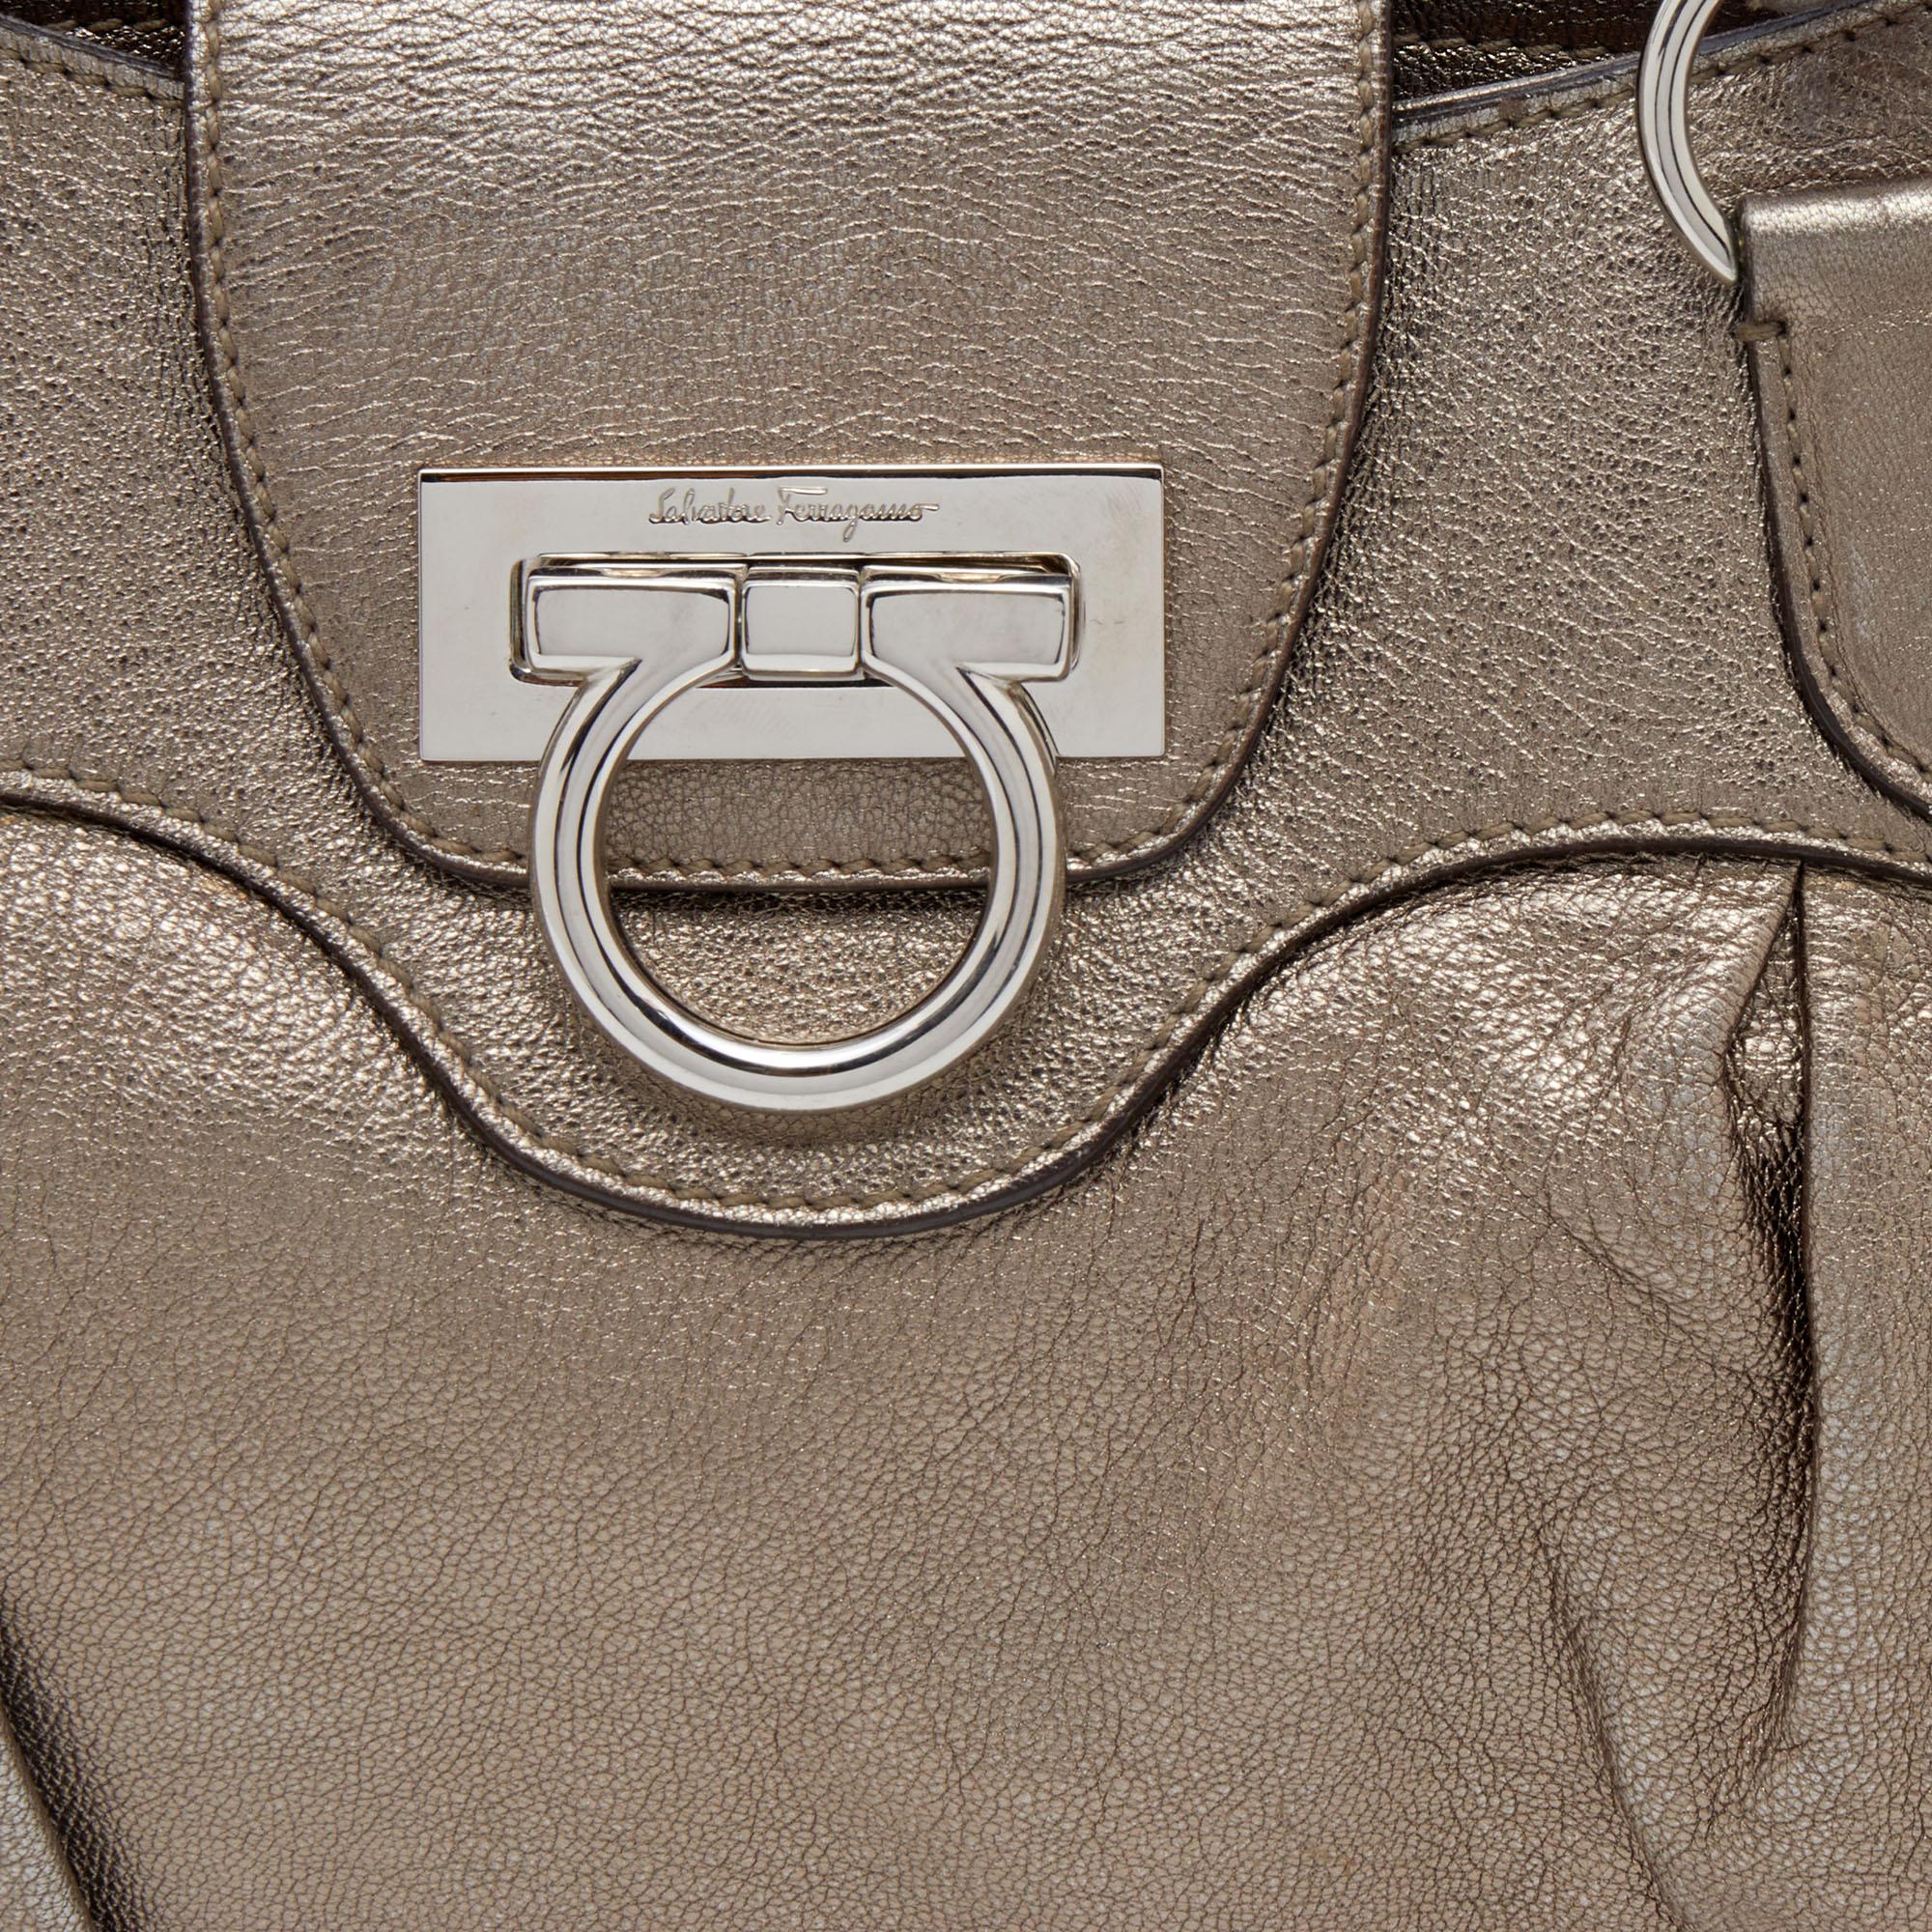 Salvatore Ferragamo Metallic Gold Leather Marisa Shoulder Bag In Good Condition For Sale In Dubai, Al Qouz 2